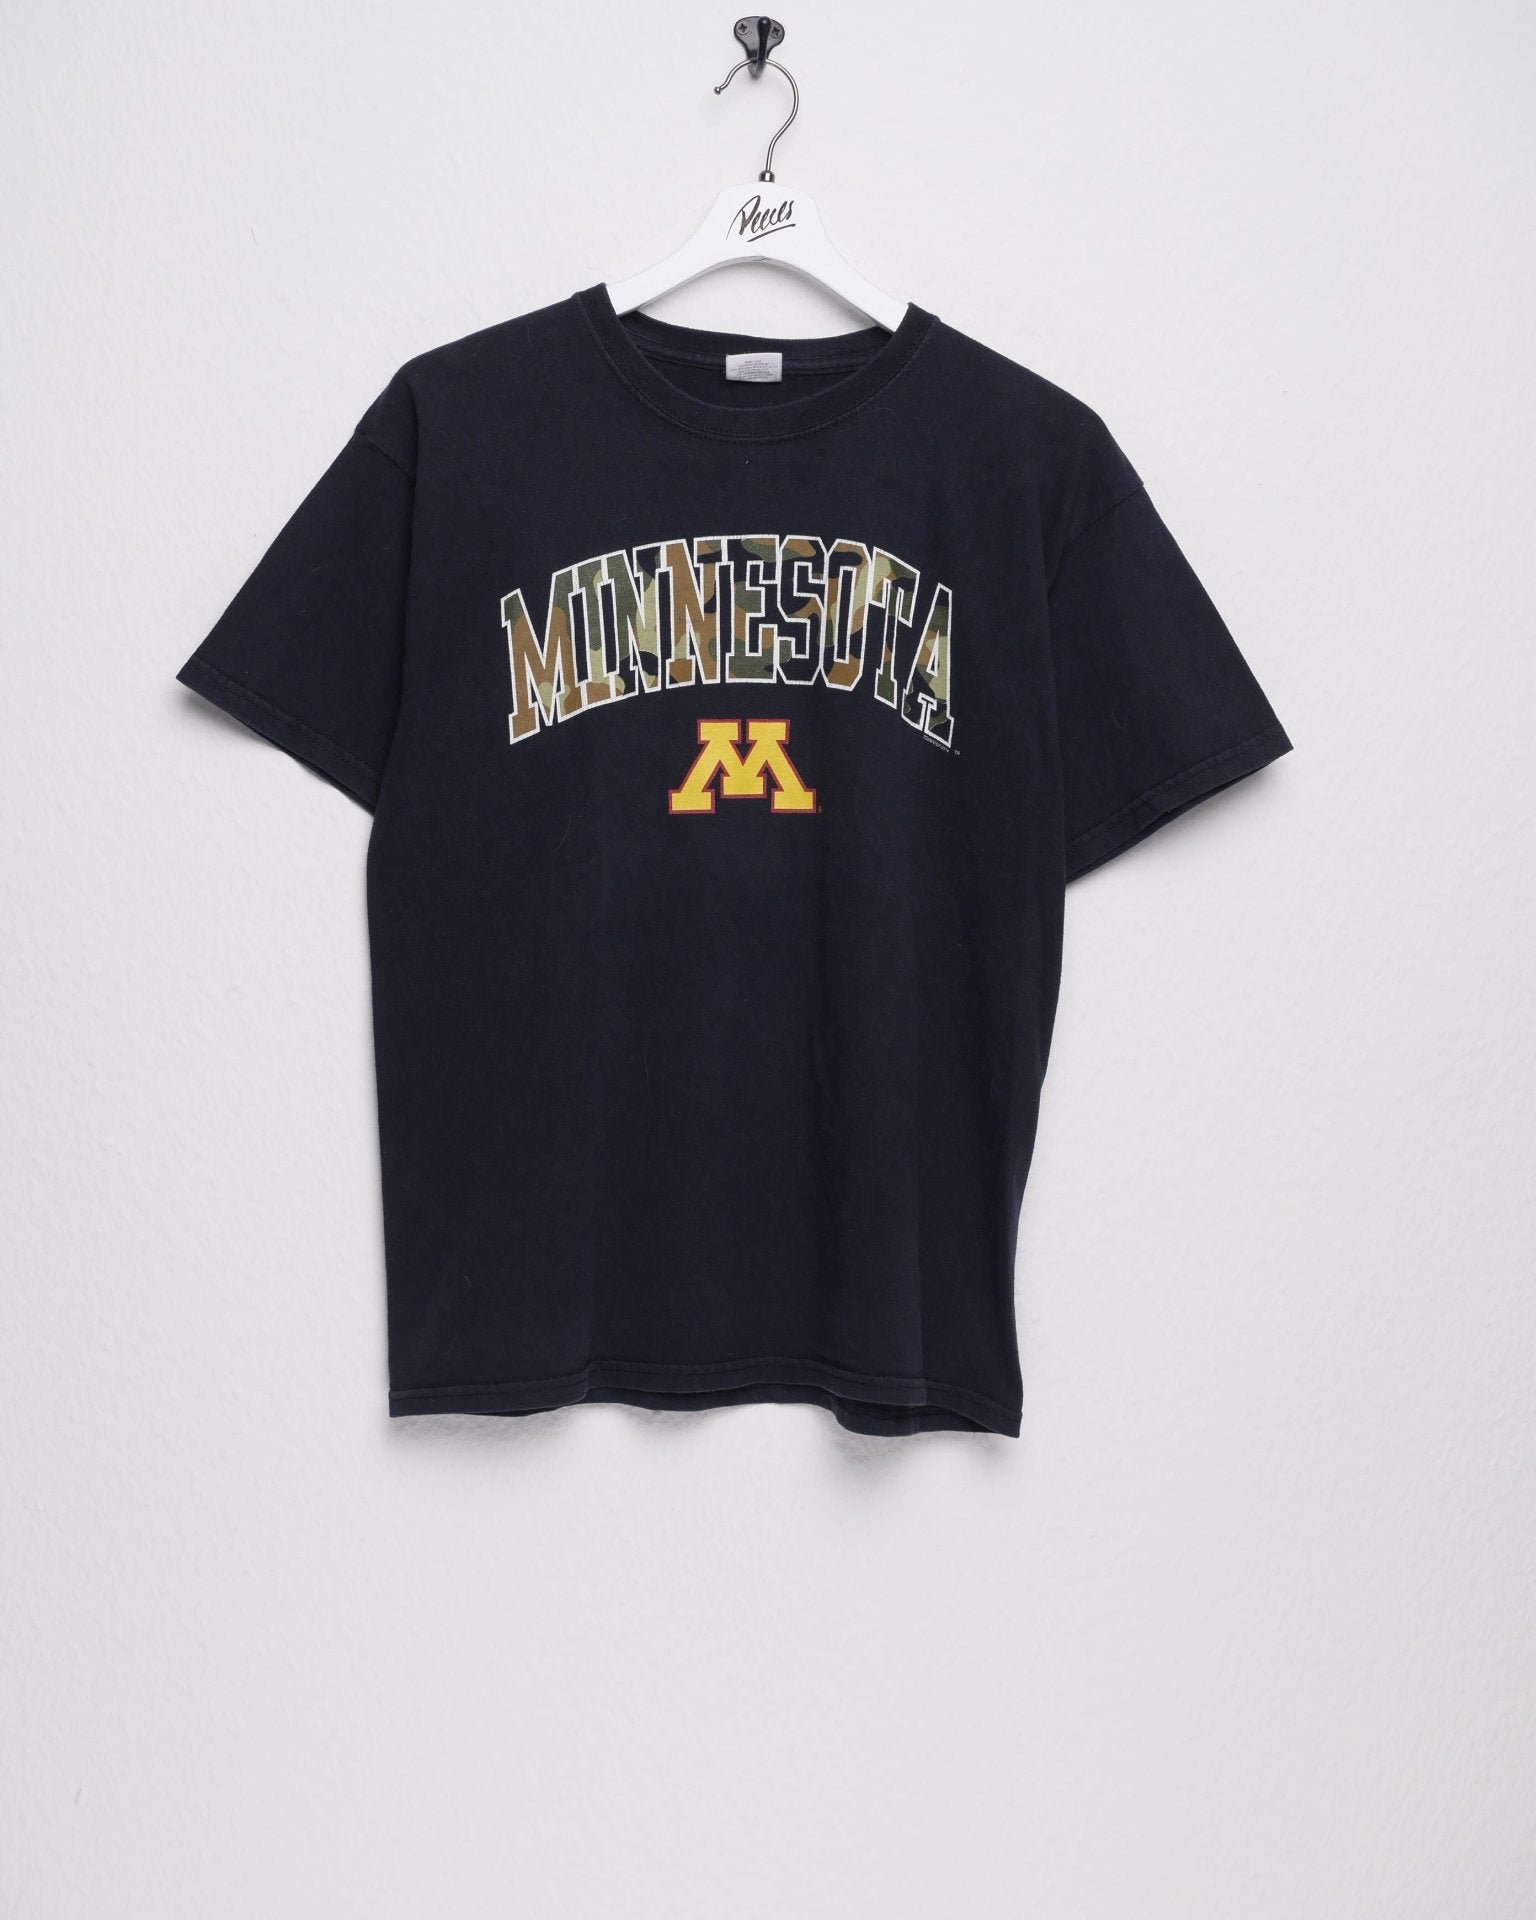 'Minnesota' printed Spellout black Shirt - Peeces